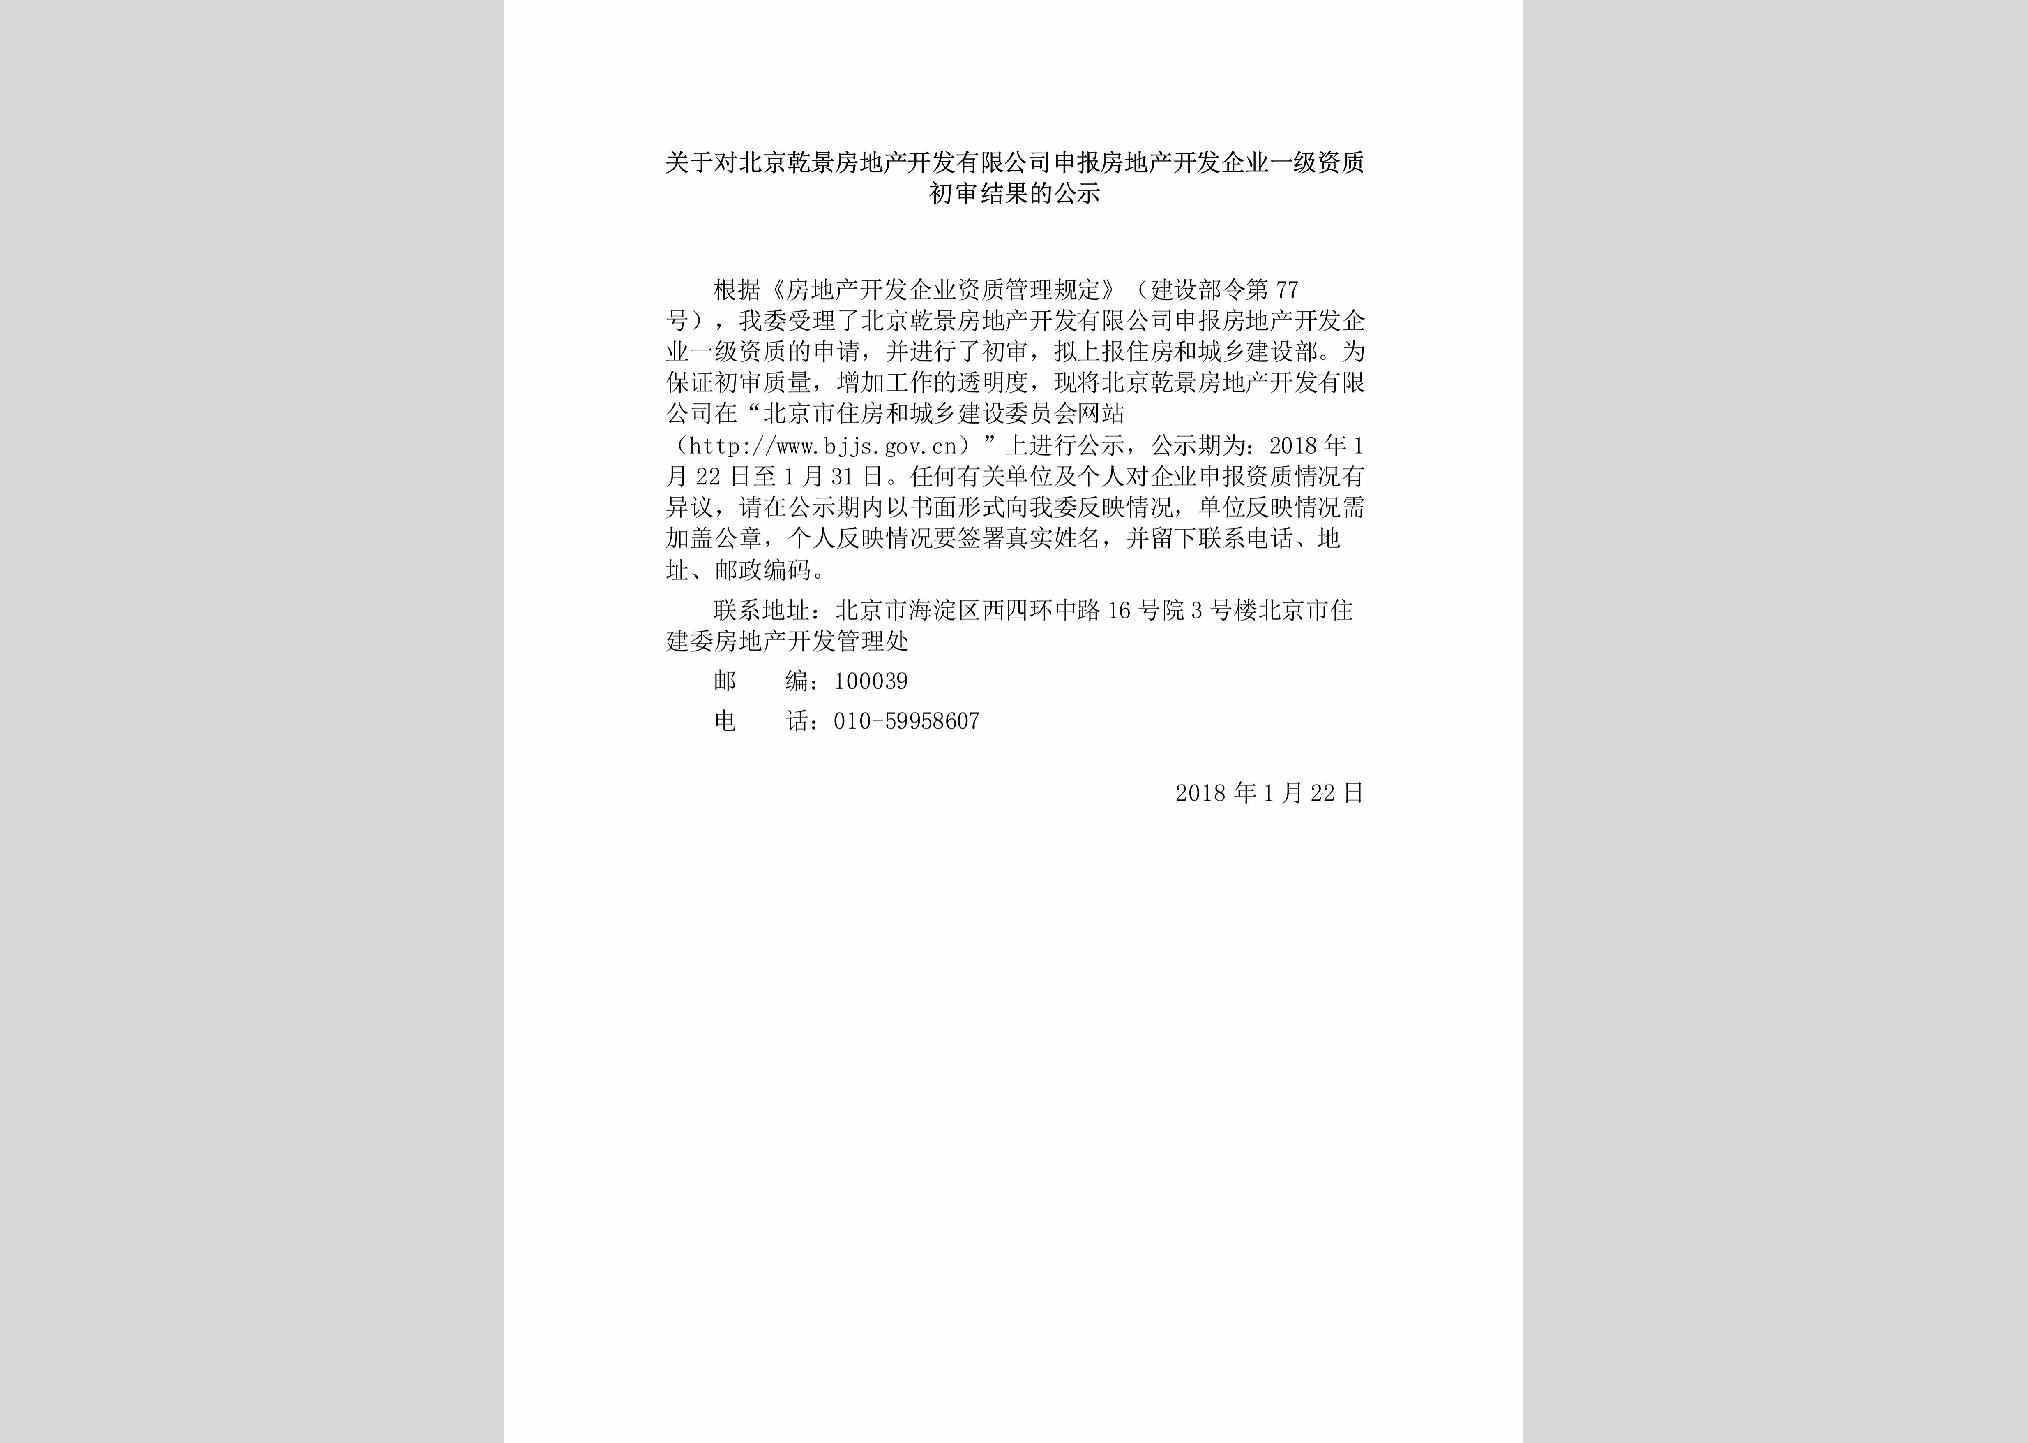 BJ-SBFDCKFQ-2018：关于对北京乾景房地产开发有限公司申报房地产开发企业一级资质初审结果的公示